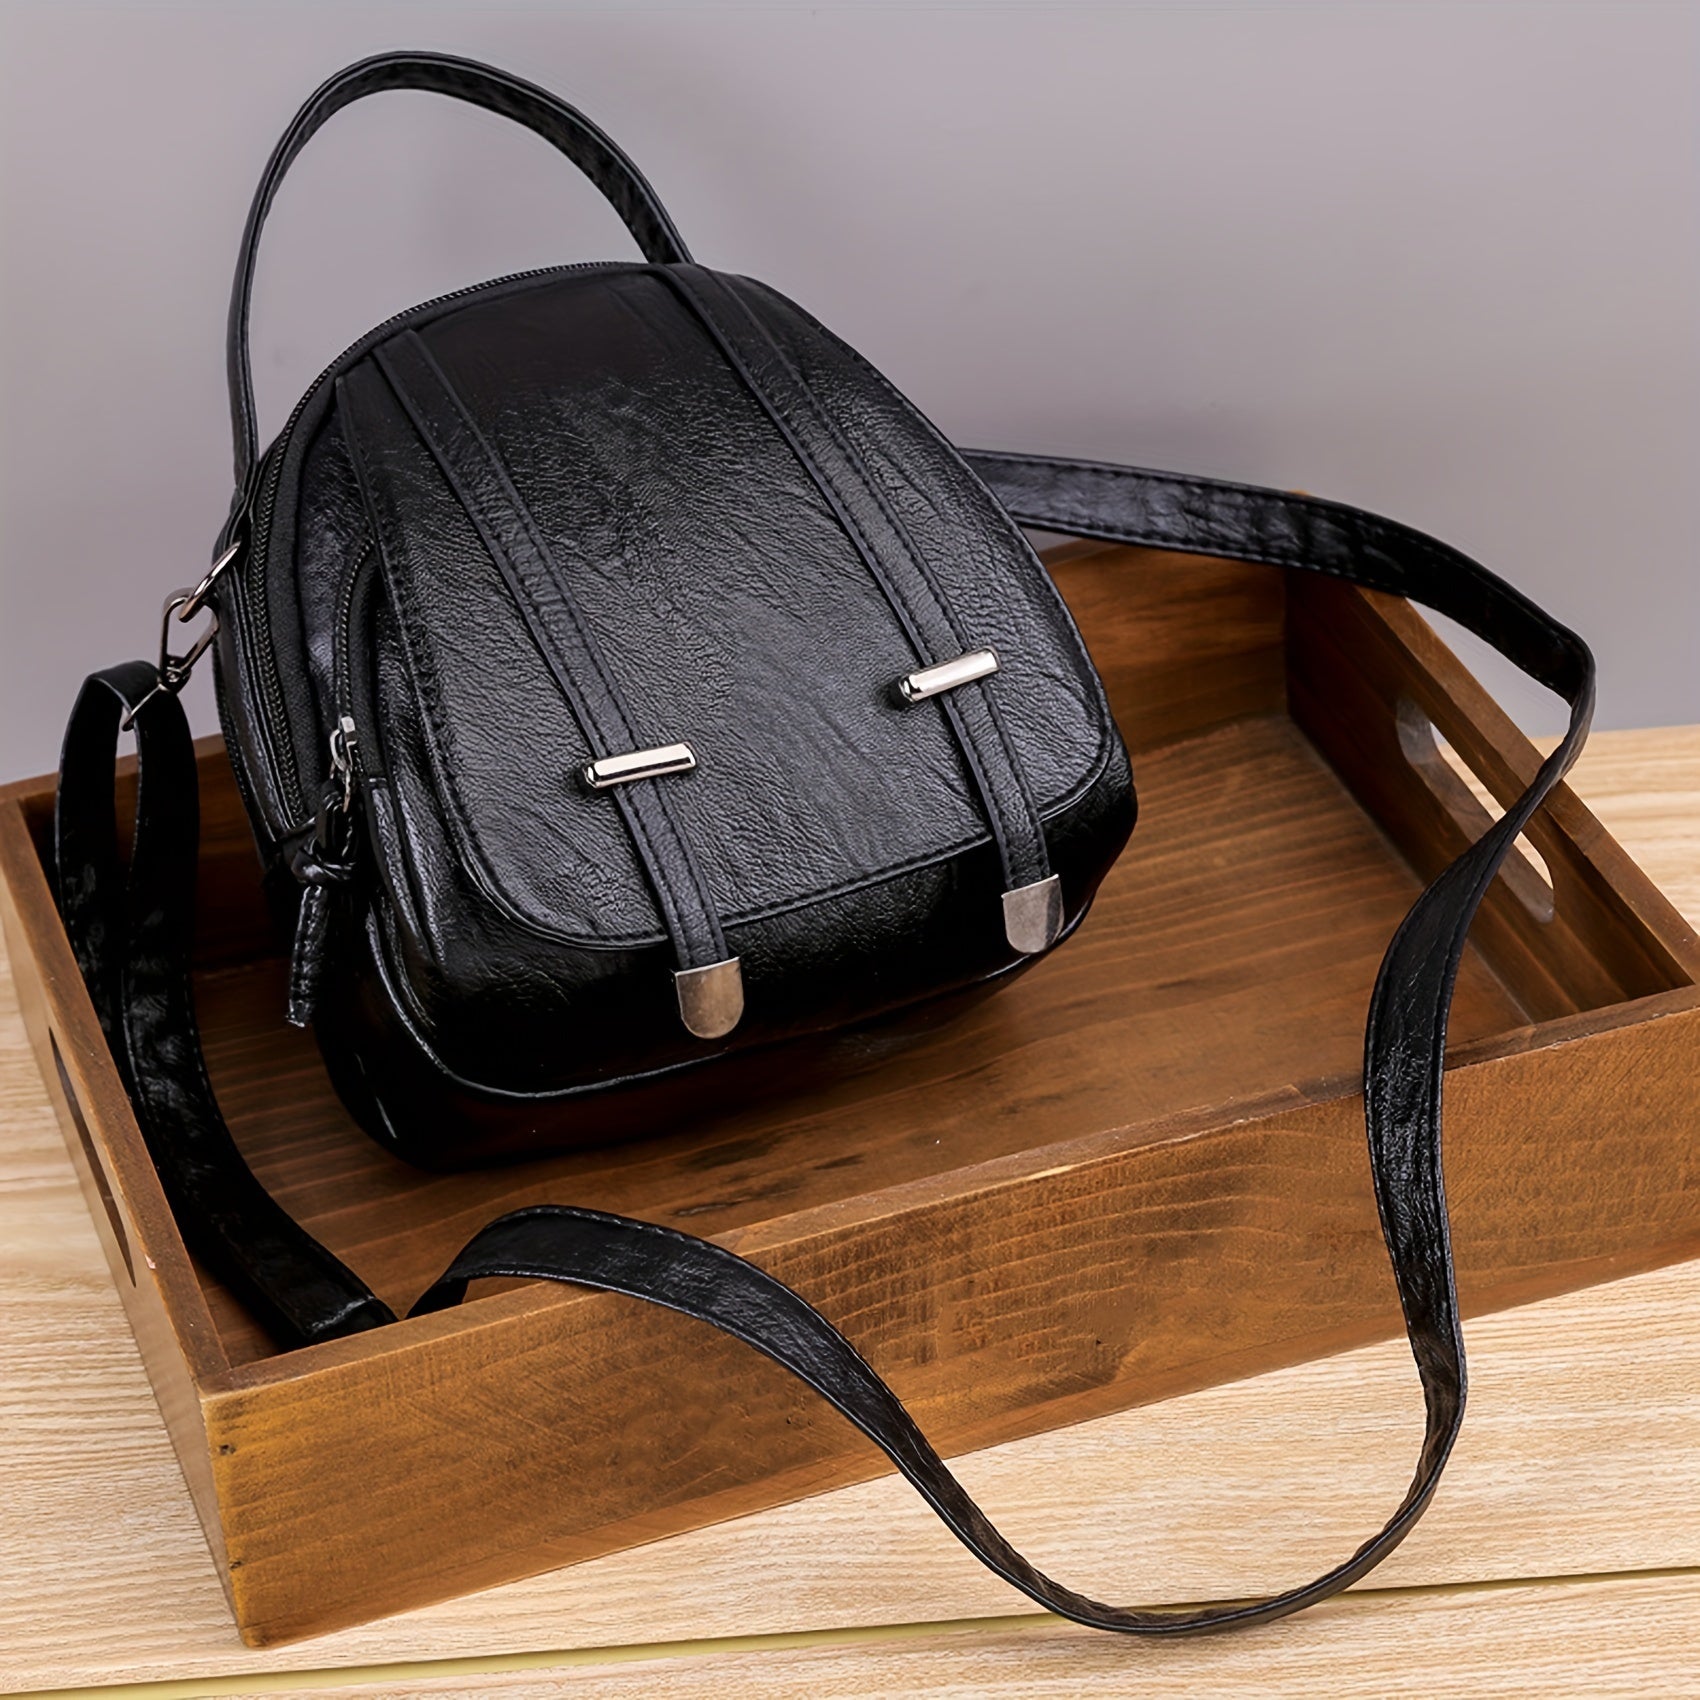 Retro Mini Crossbody Bag, Women's Multi Layer Handbag, Simple PU Leather Shoulder Purse